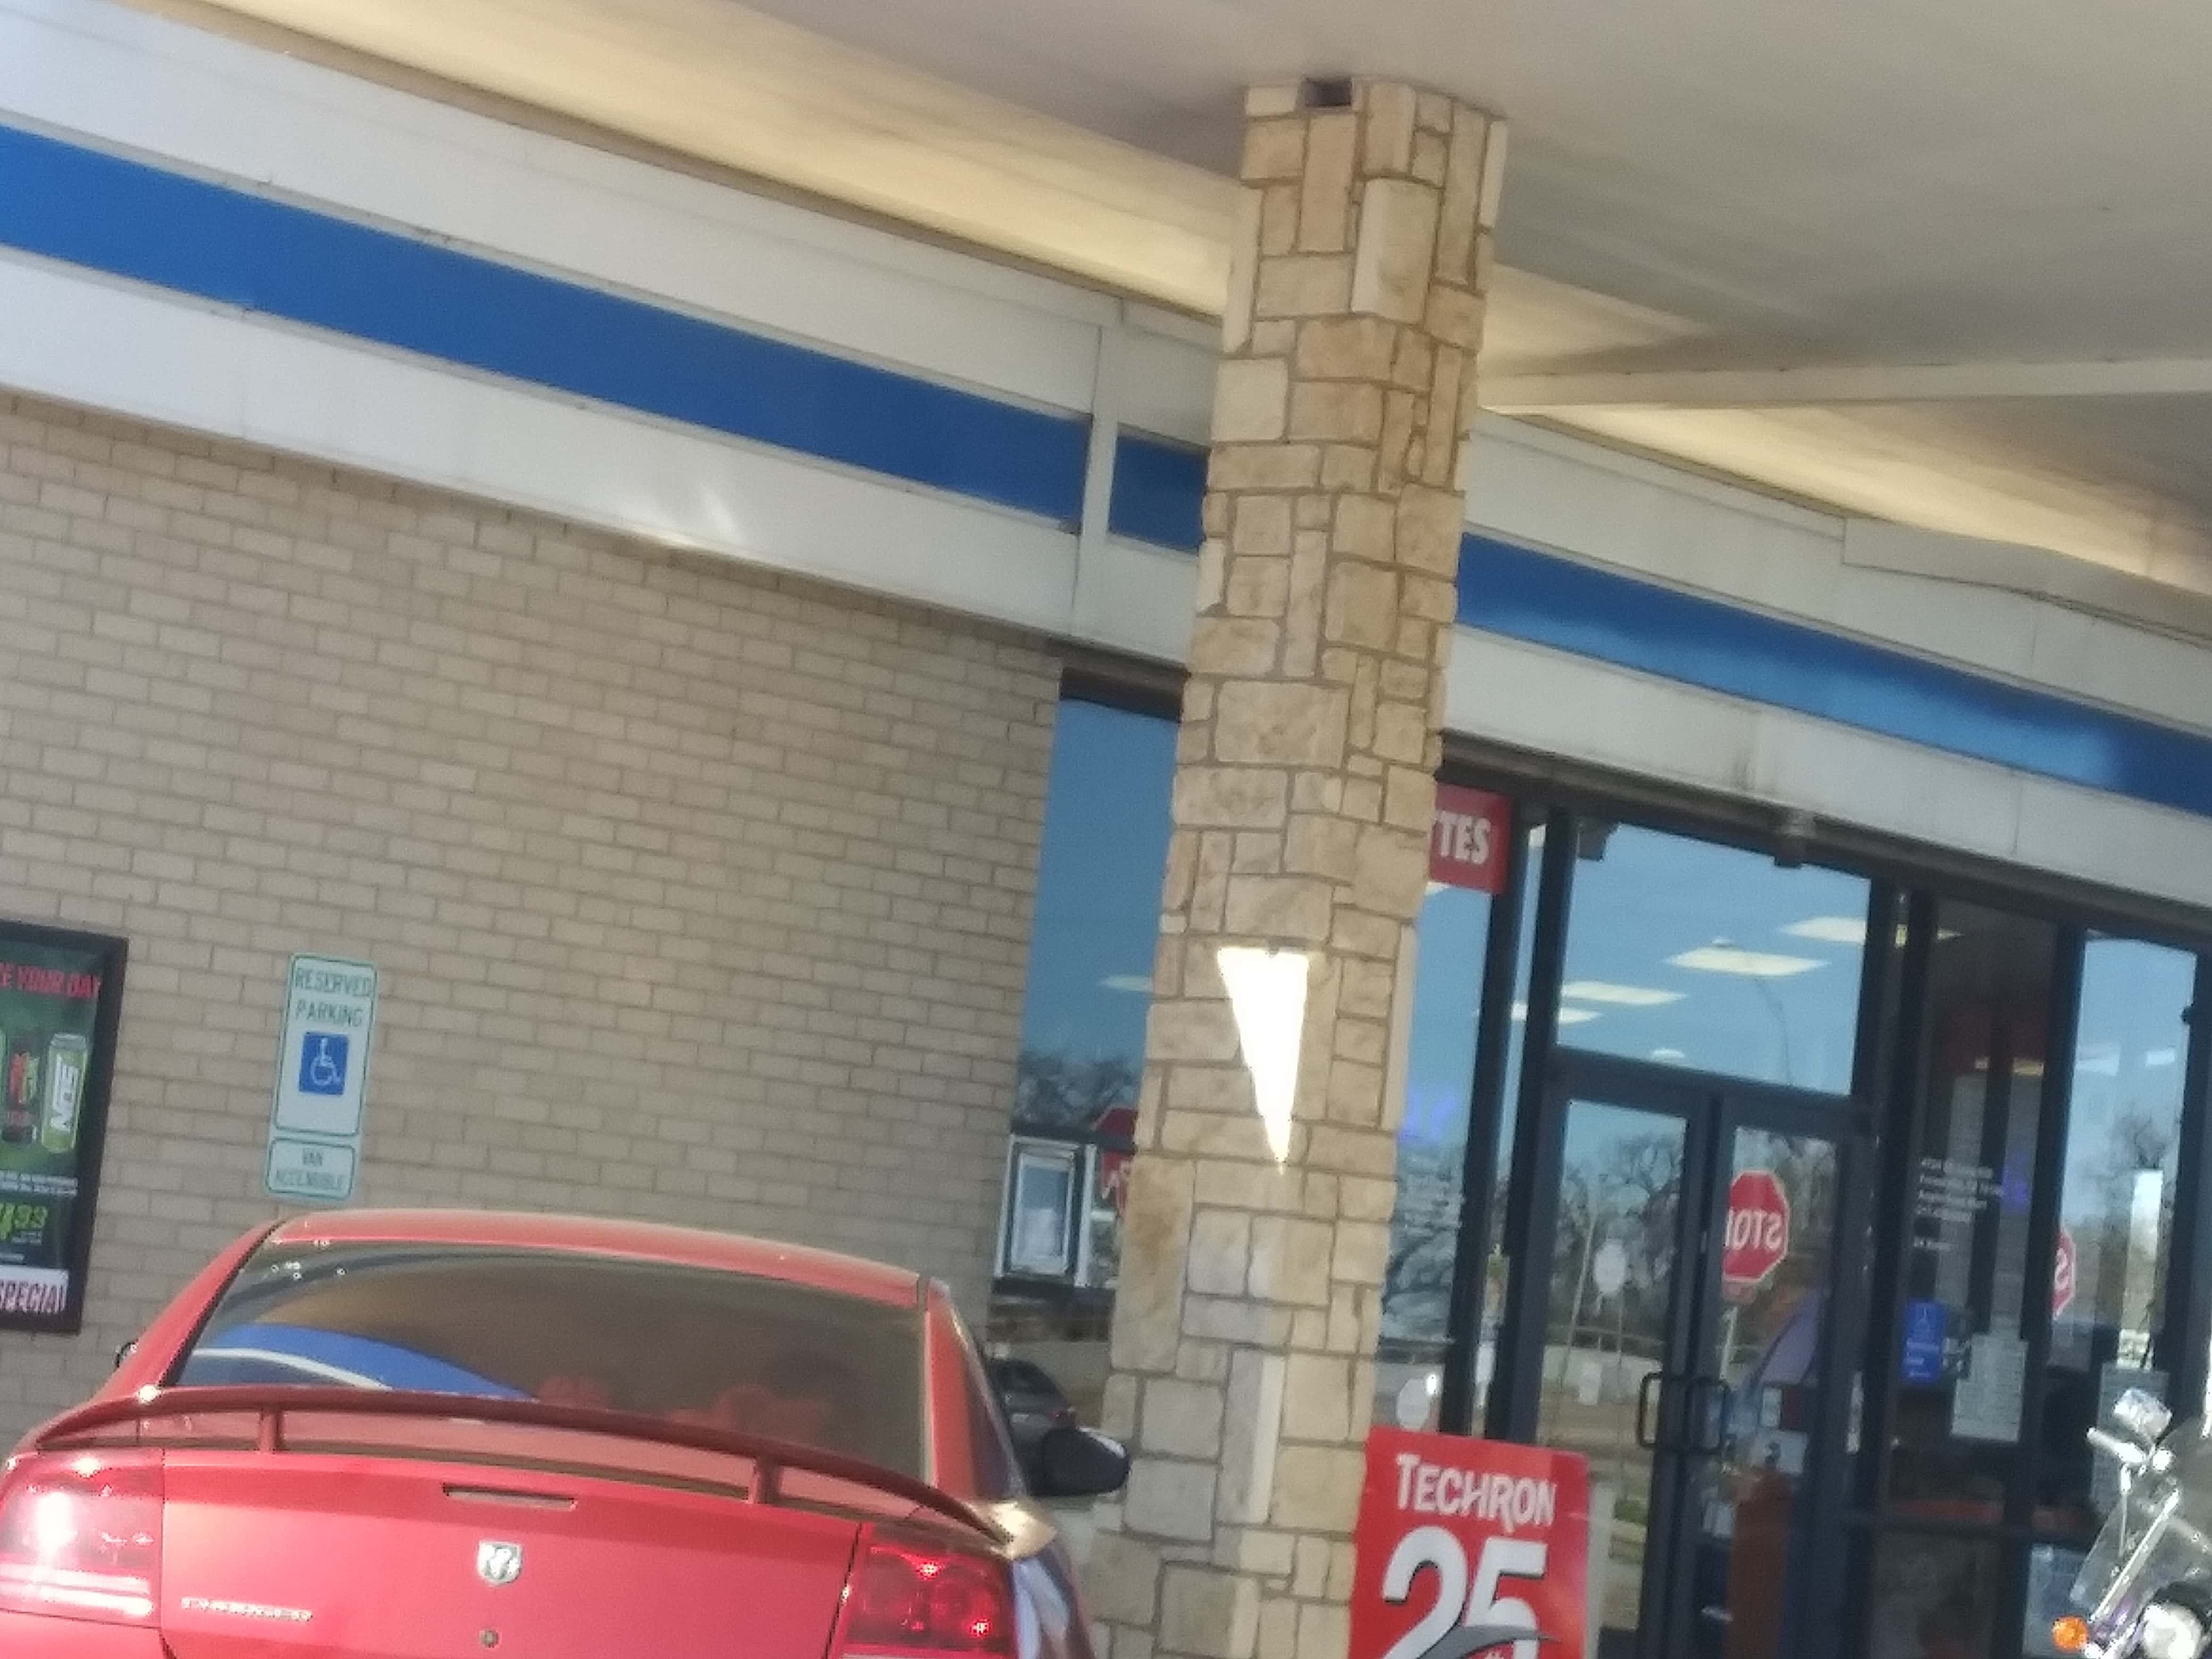 Chevron - Fort Worth (TX 76140), US, gasoline station near me